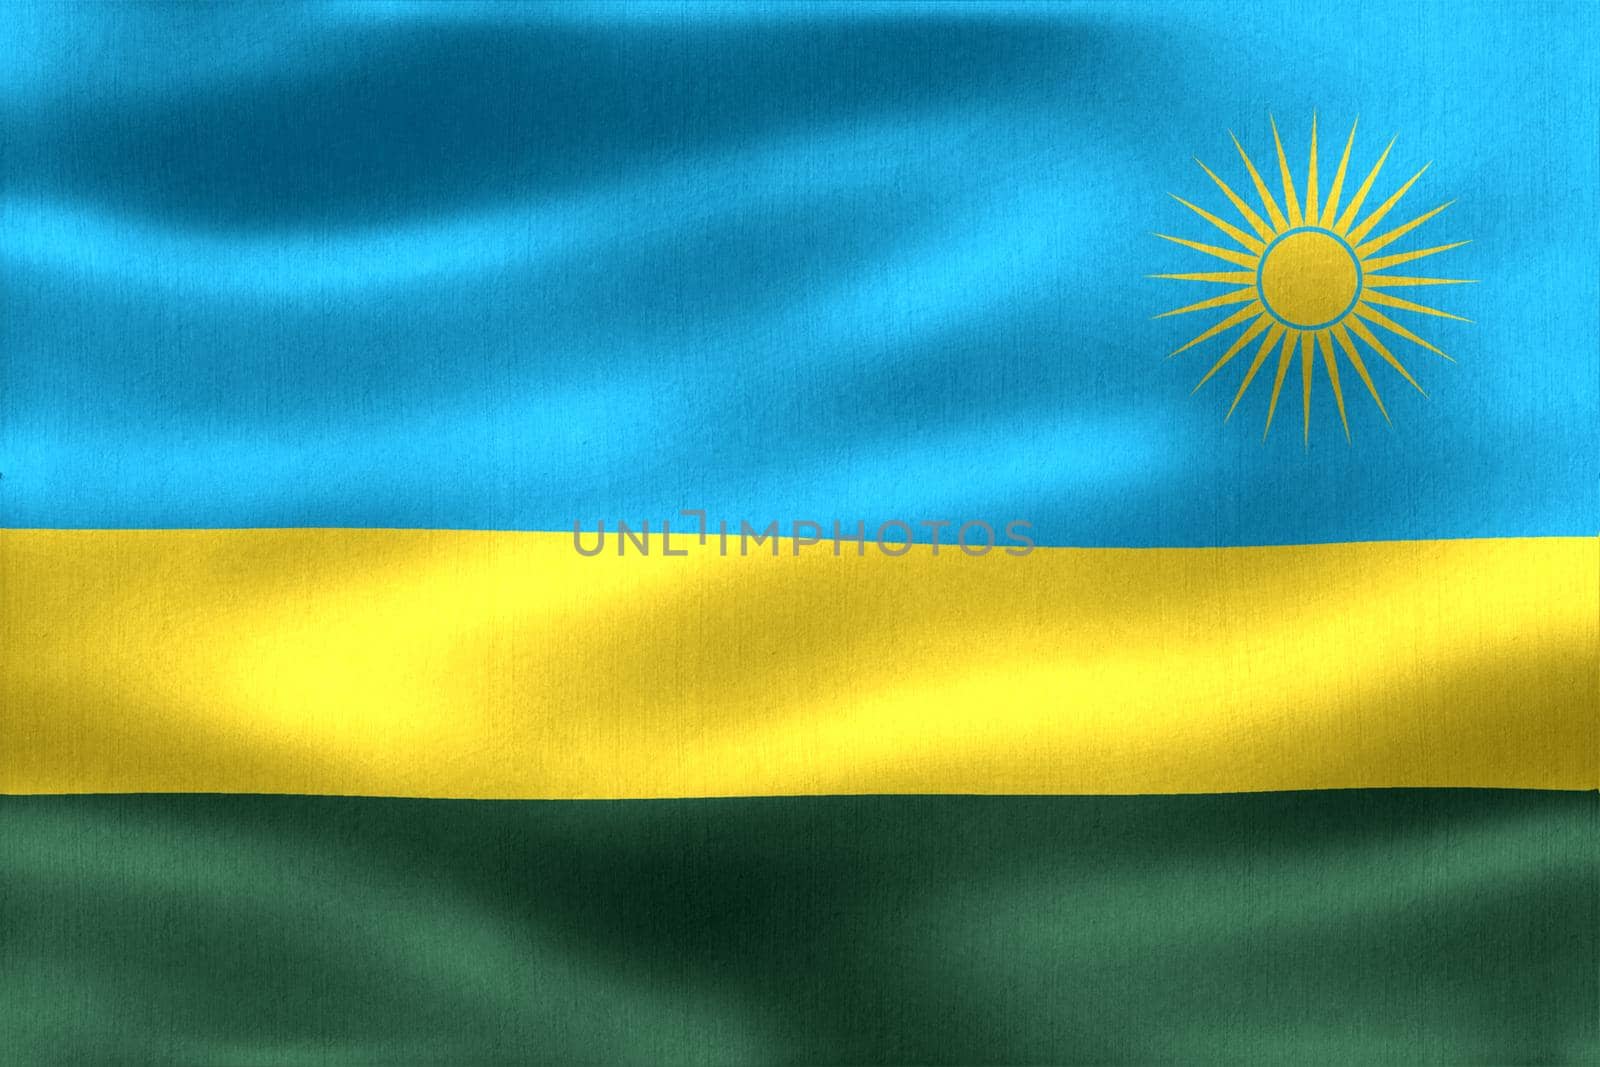 Rwanda flag - realistic waving fabric flag